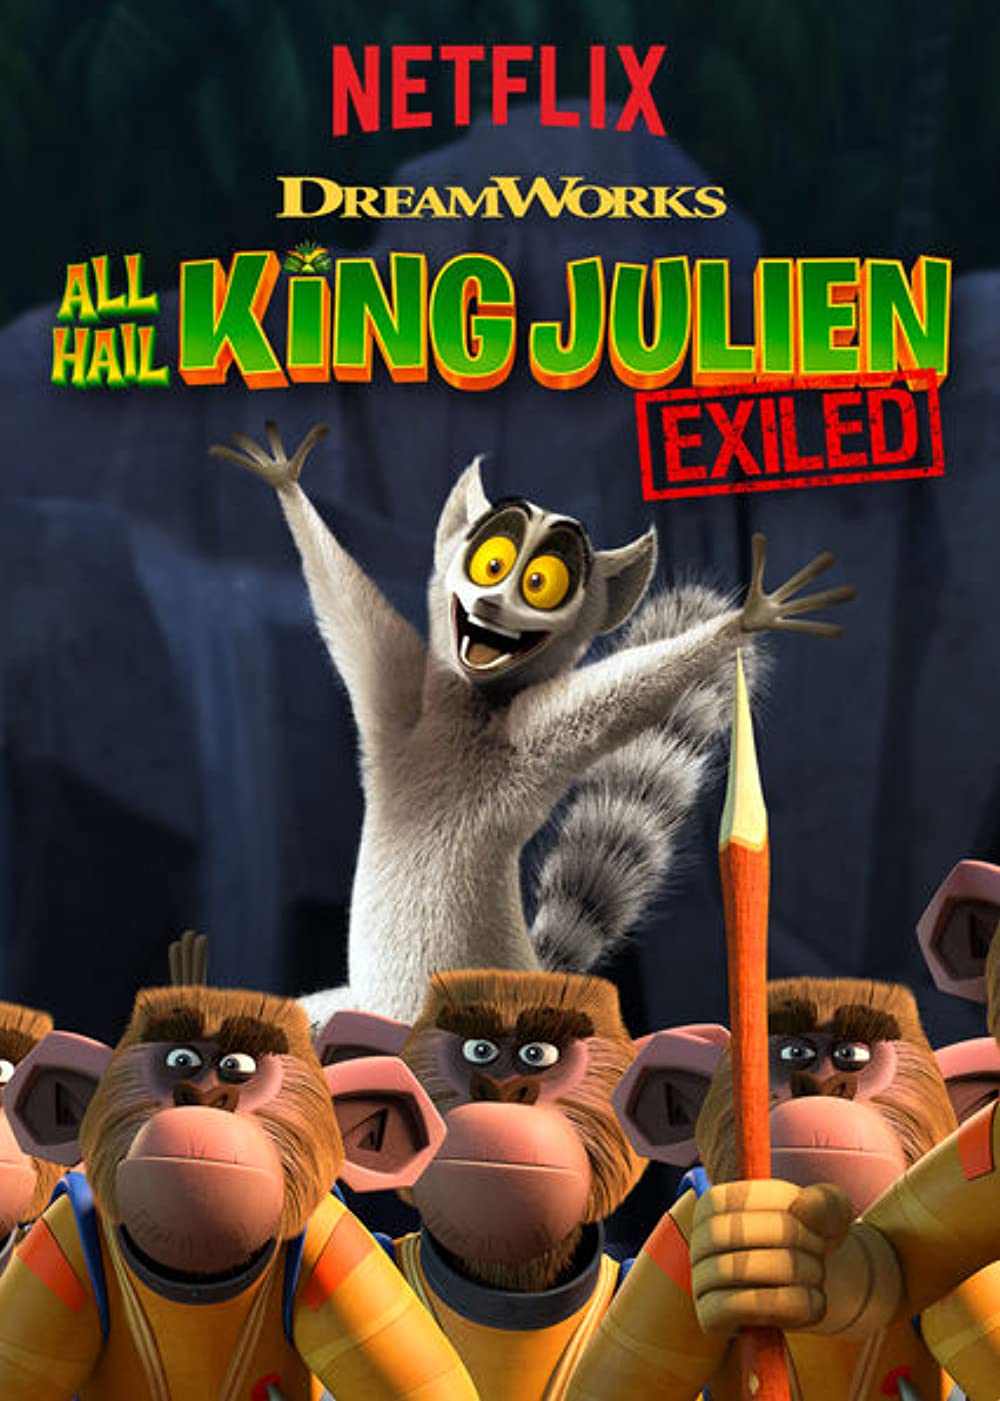 All Hail King Julien: Exiled (2017)